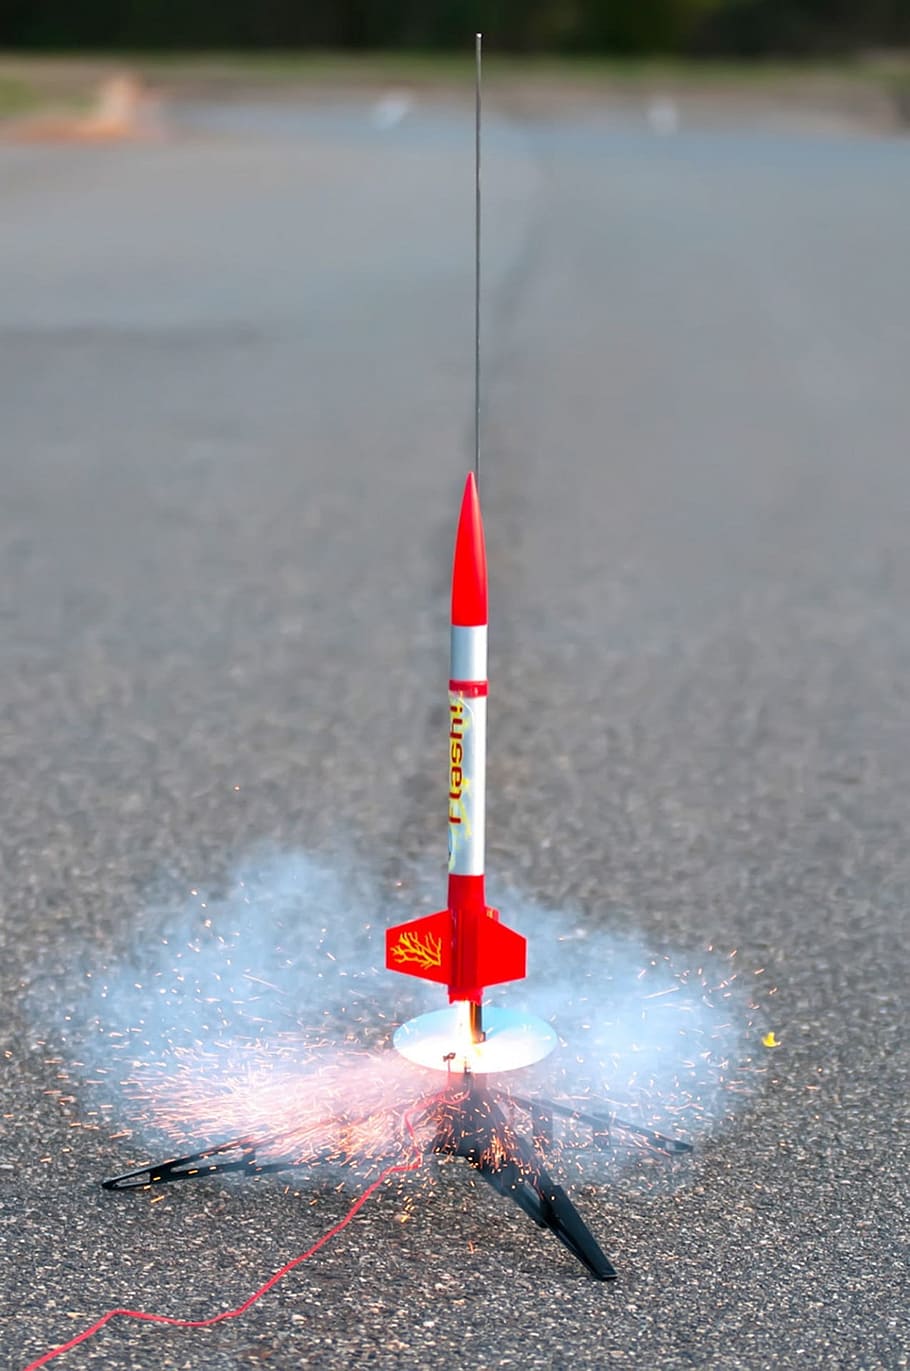 lighted rocket, Hobby, Rocket, Model, Launching, Launch, science, flight, asphalt, children